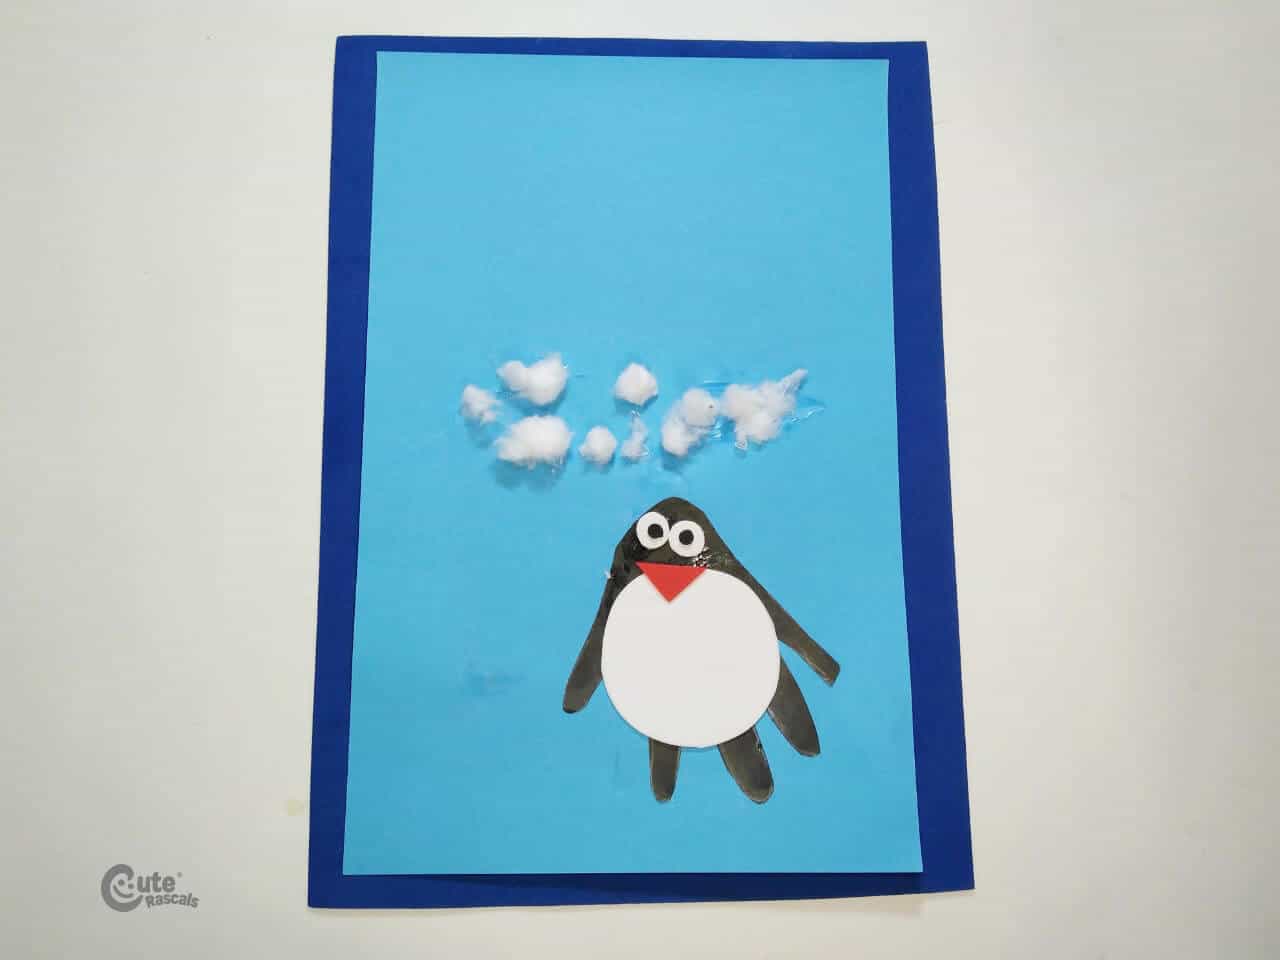 glue some cotton balls above the penguin image